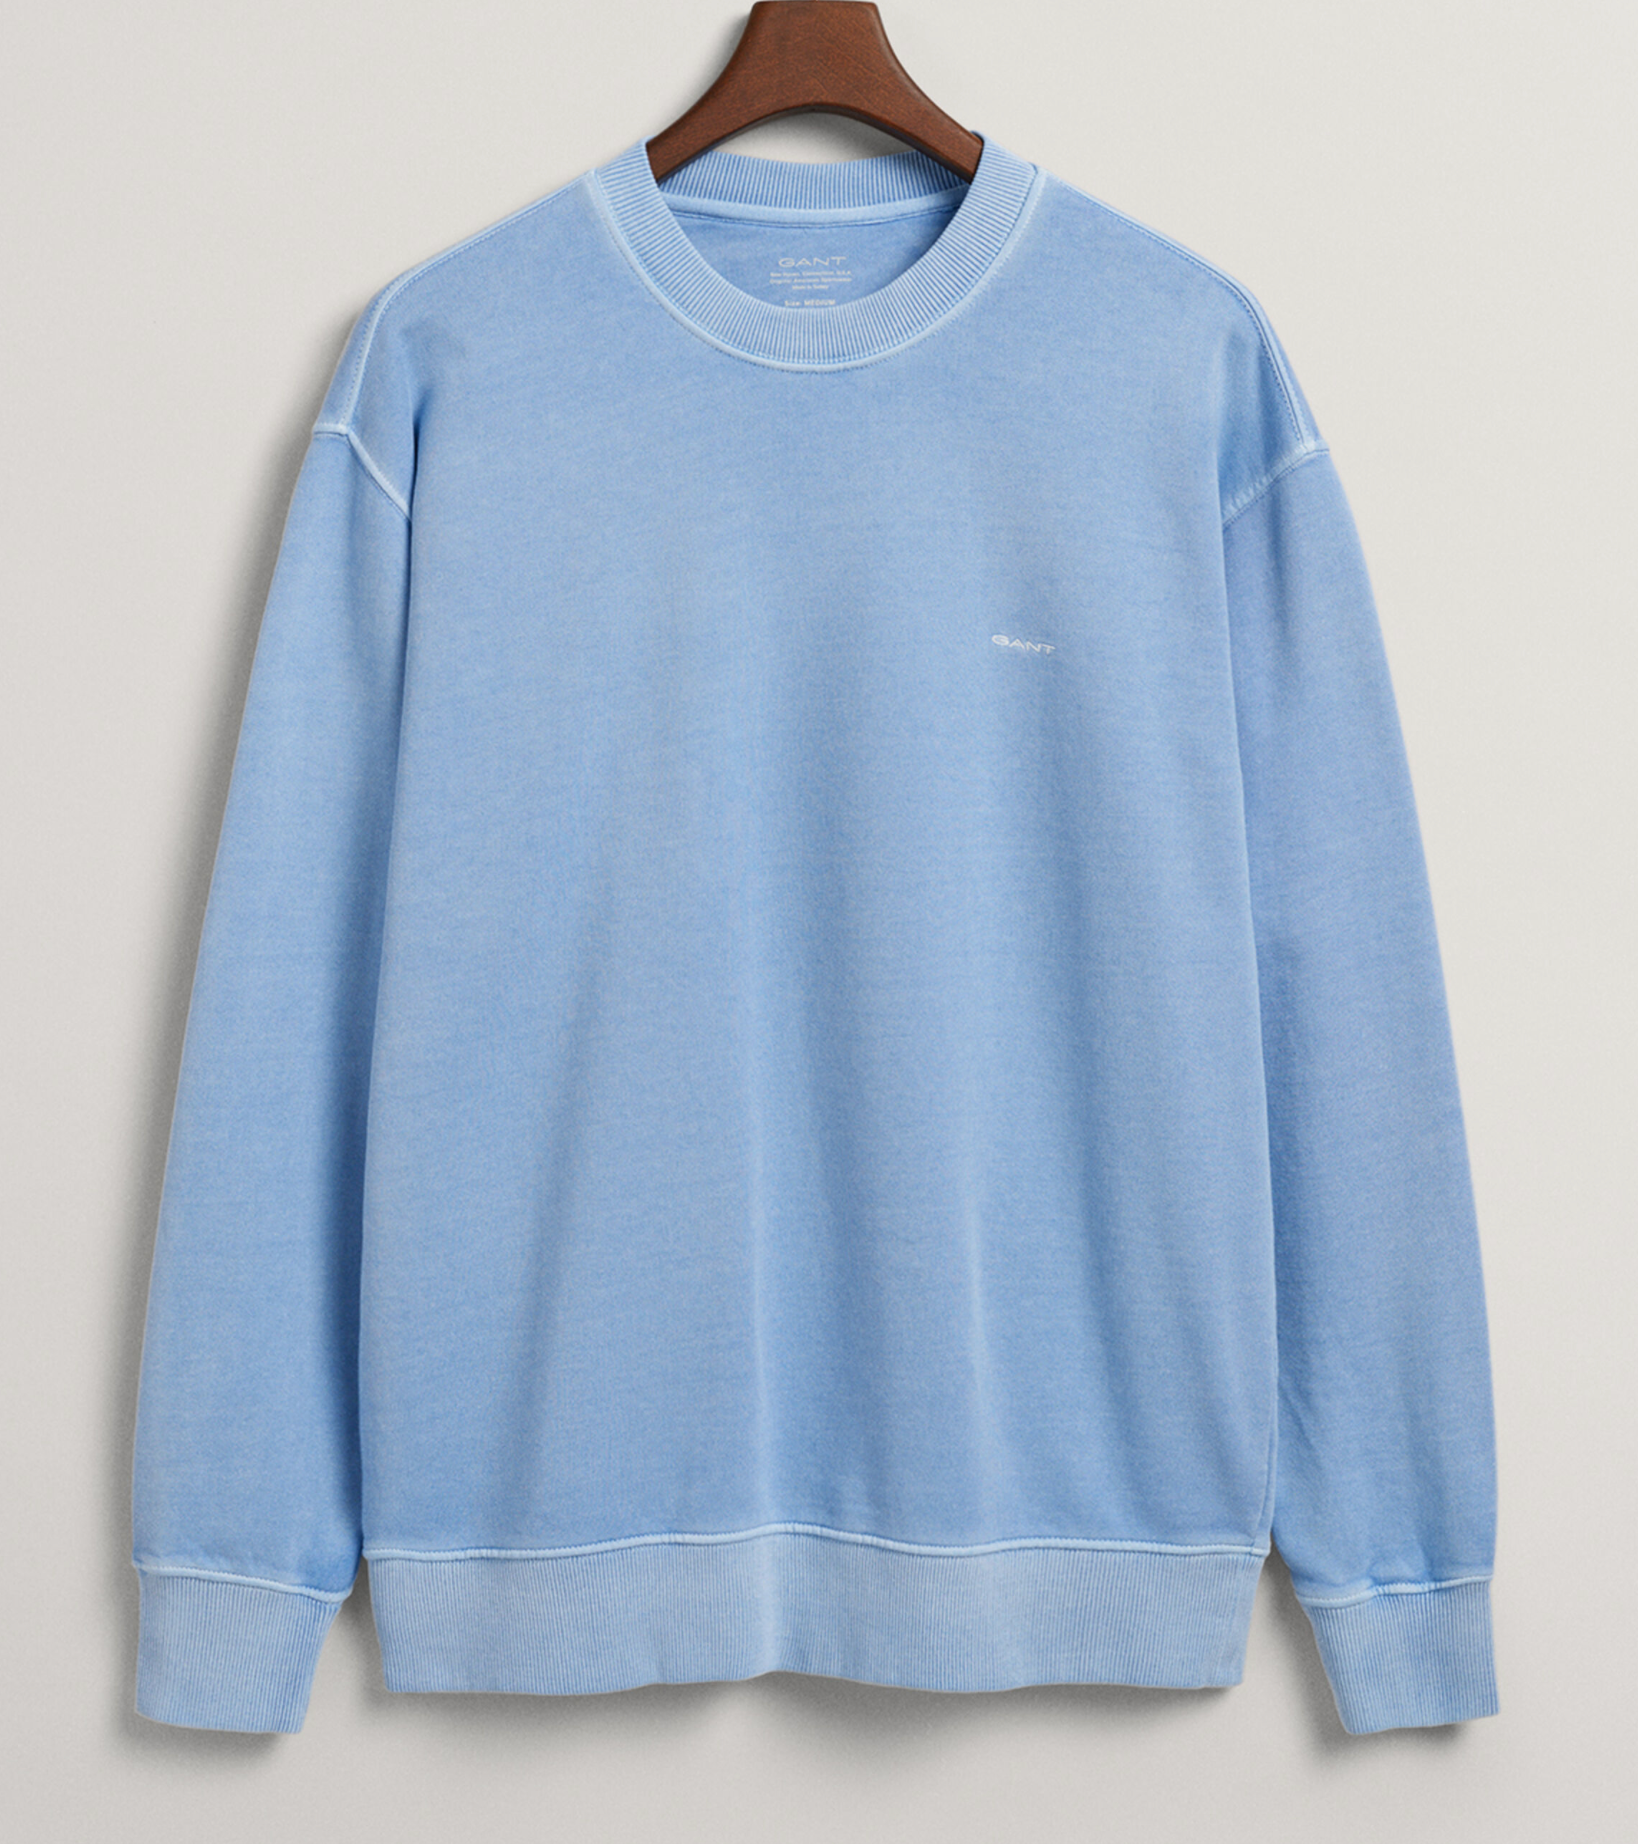 Gant "Sunfaded" Sweatshirt Gentle Blue